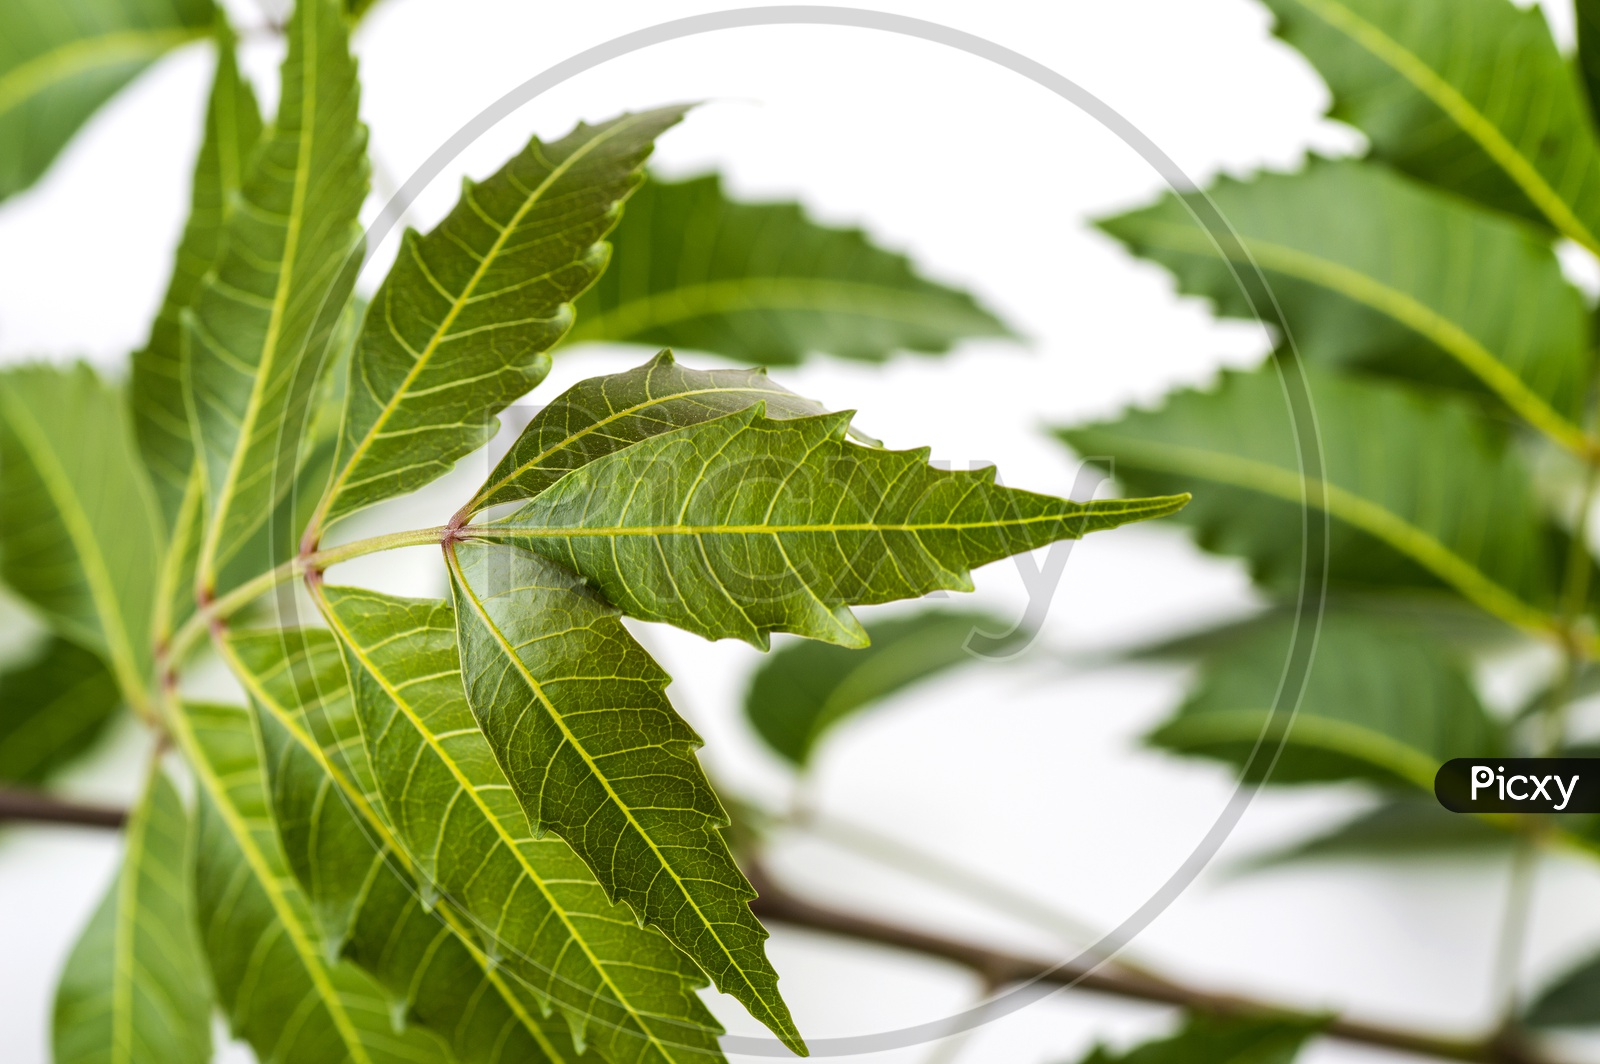 Medicinal neem leaf on white background. Azadirachta indica.